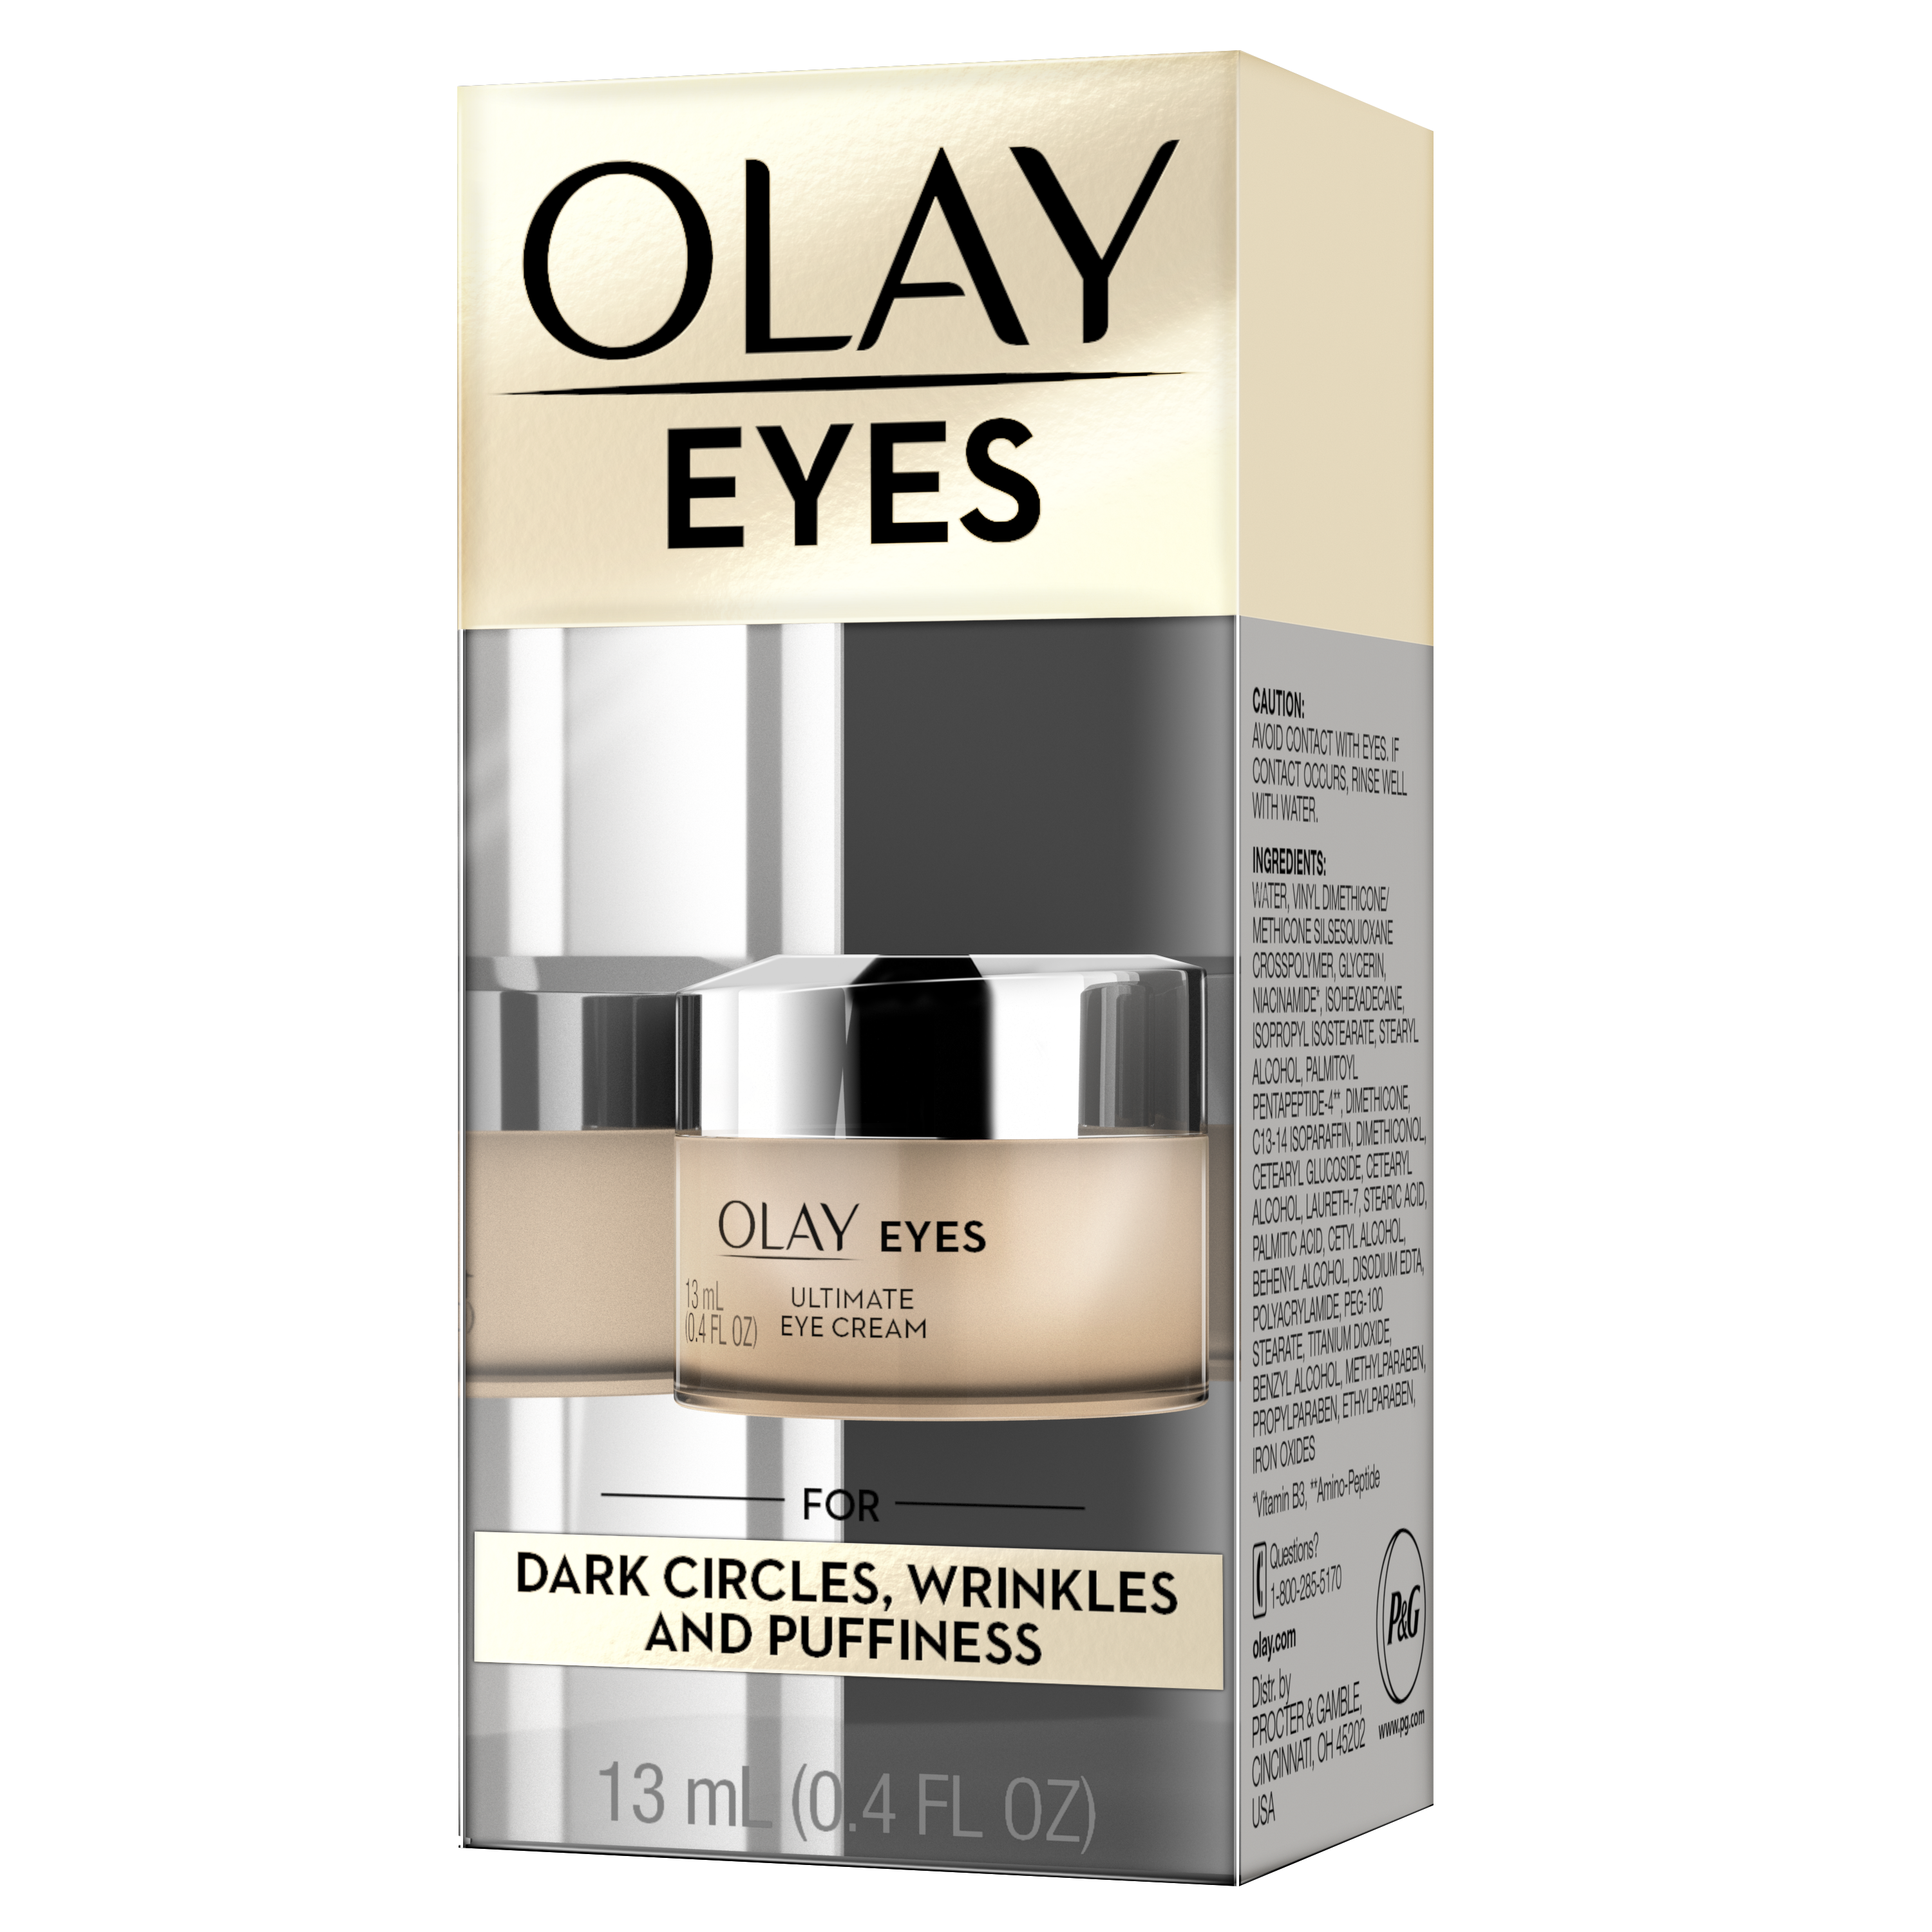 Olay Eyes Ultimate Eye Cream for Wrinkles, Puffy Eyes and Dark Circles_1